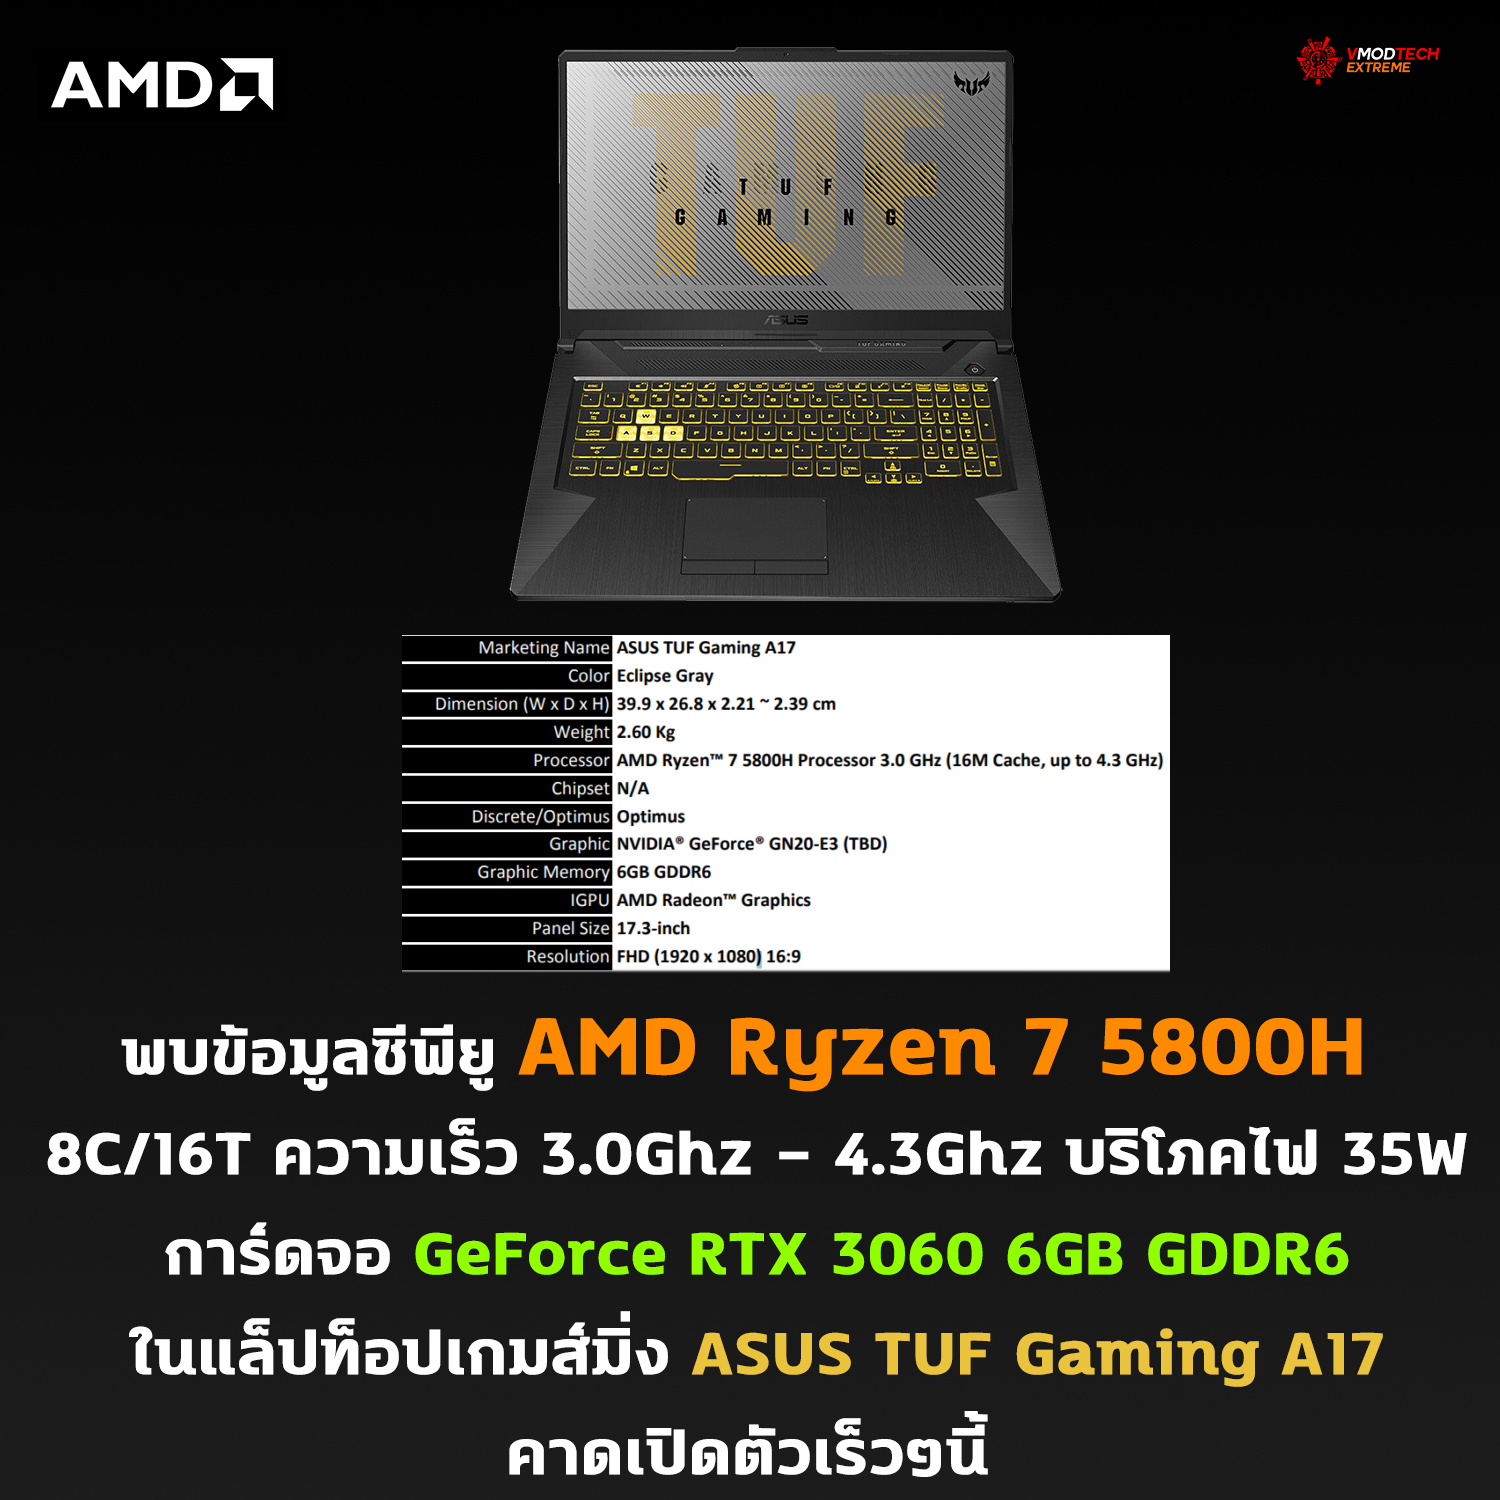 amd ryzen 7 5800h geforce rtx 3060 asus tuf gaming a17 พบข้อมูลซีพียู AMD Ryzen 7 5800H และการ์ดจอ GeForce RTX 3060 รุ่นใหม่ล่าสุดในแล็ปท็อปเกมส์มิ่ง ASUS TUF Gaming A17 คาดเปิดตัวเร็วๆนี้